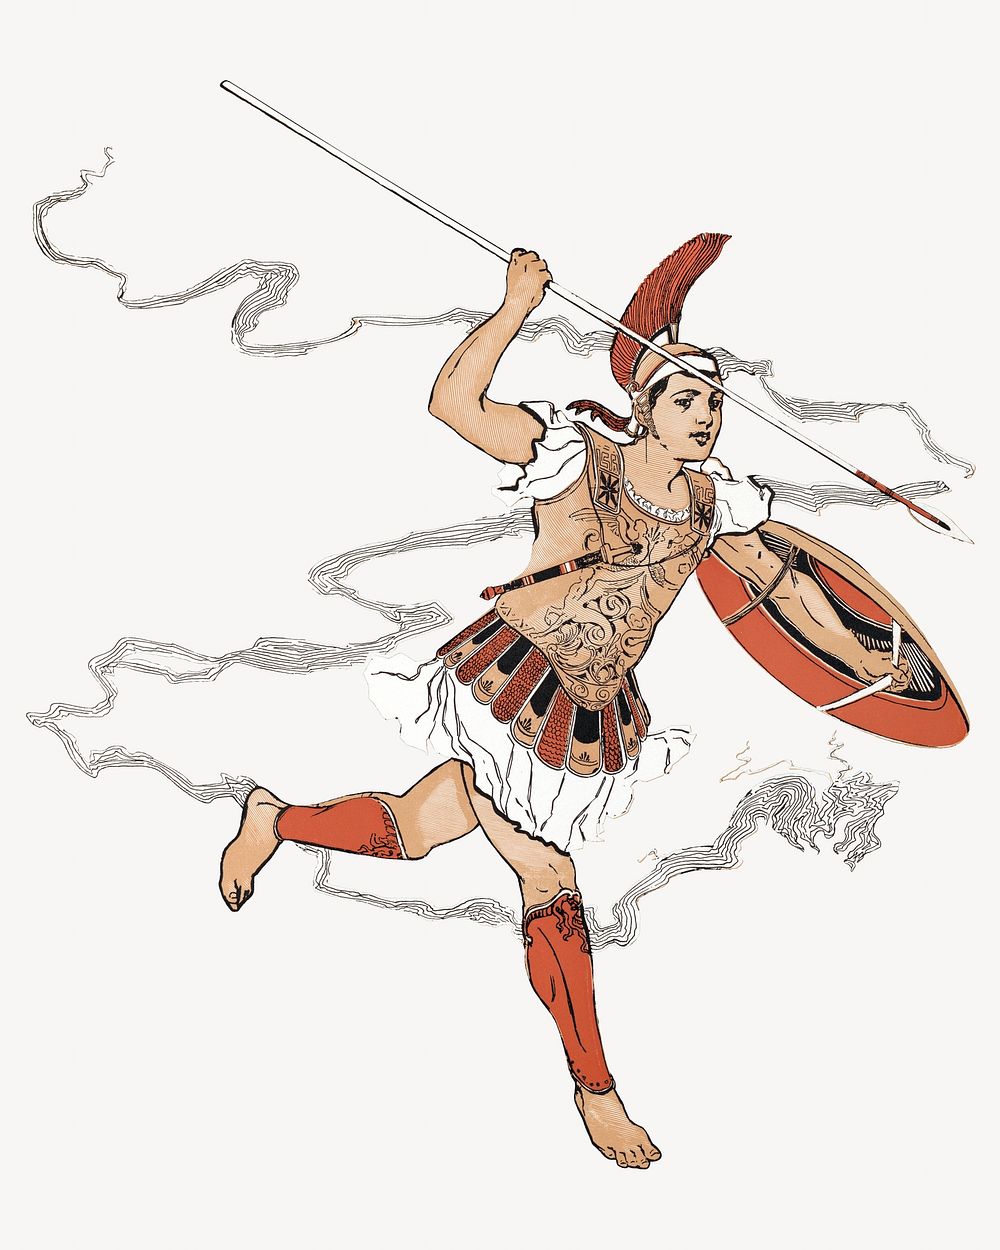 Greek gladiator illustration.  Remixed by rawpixel.